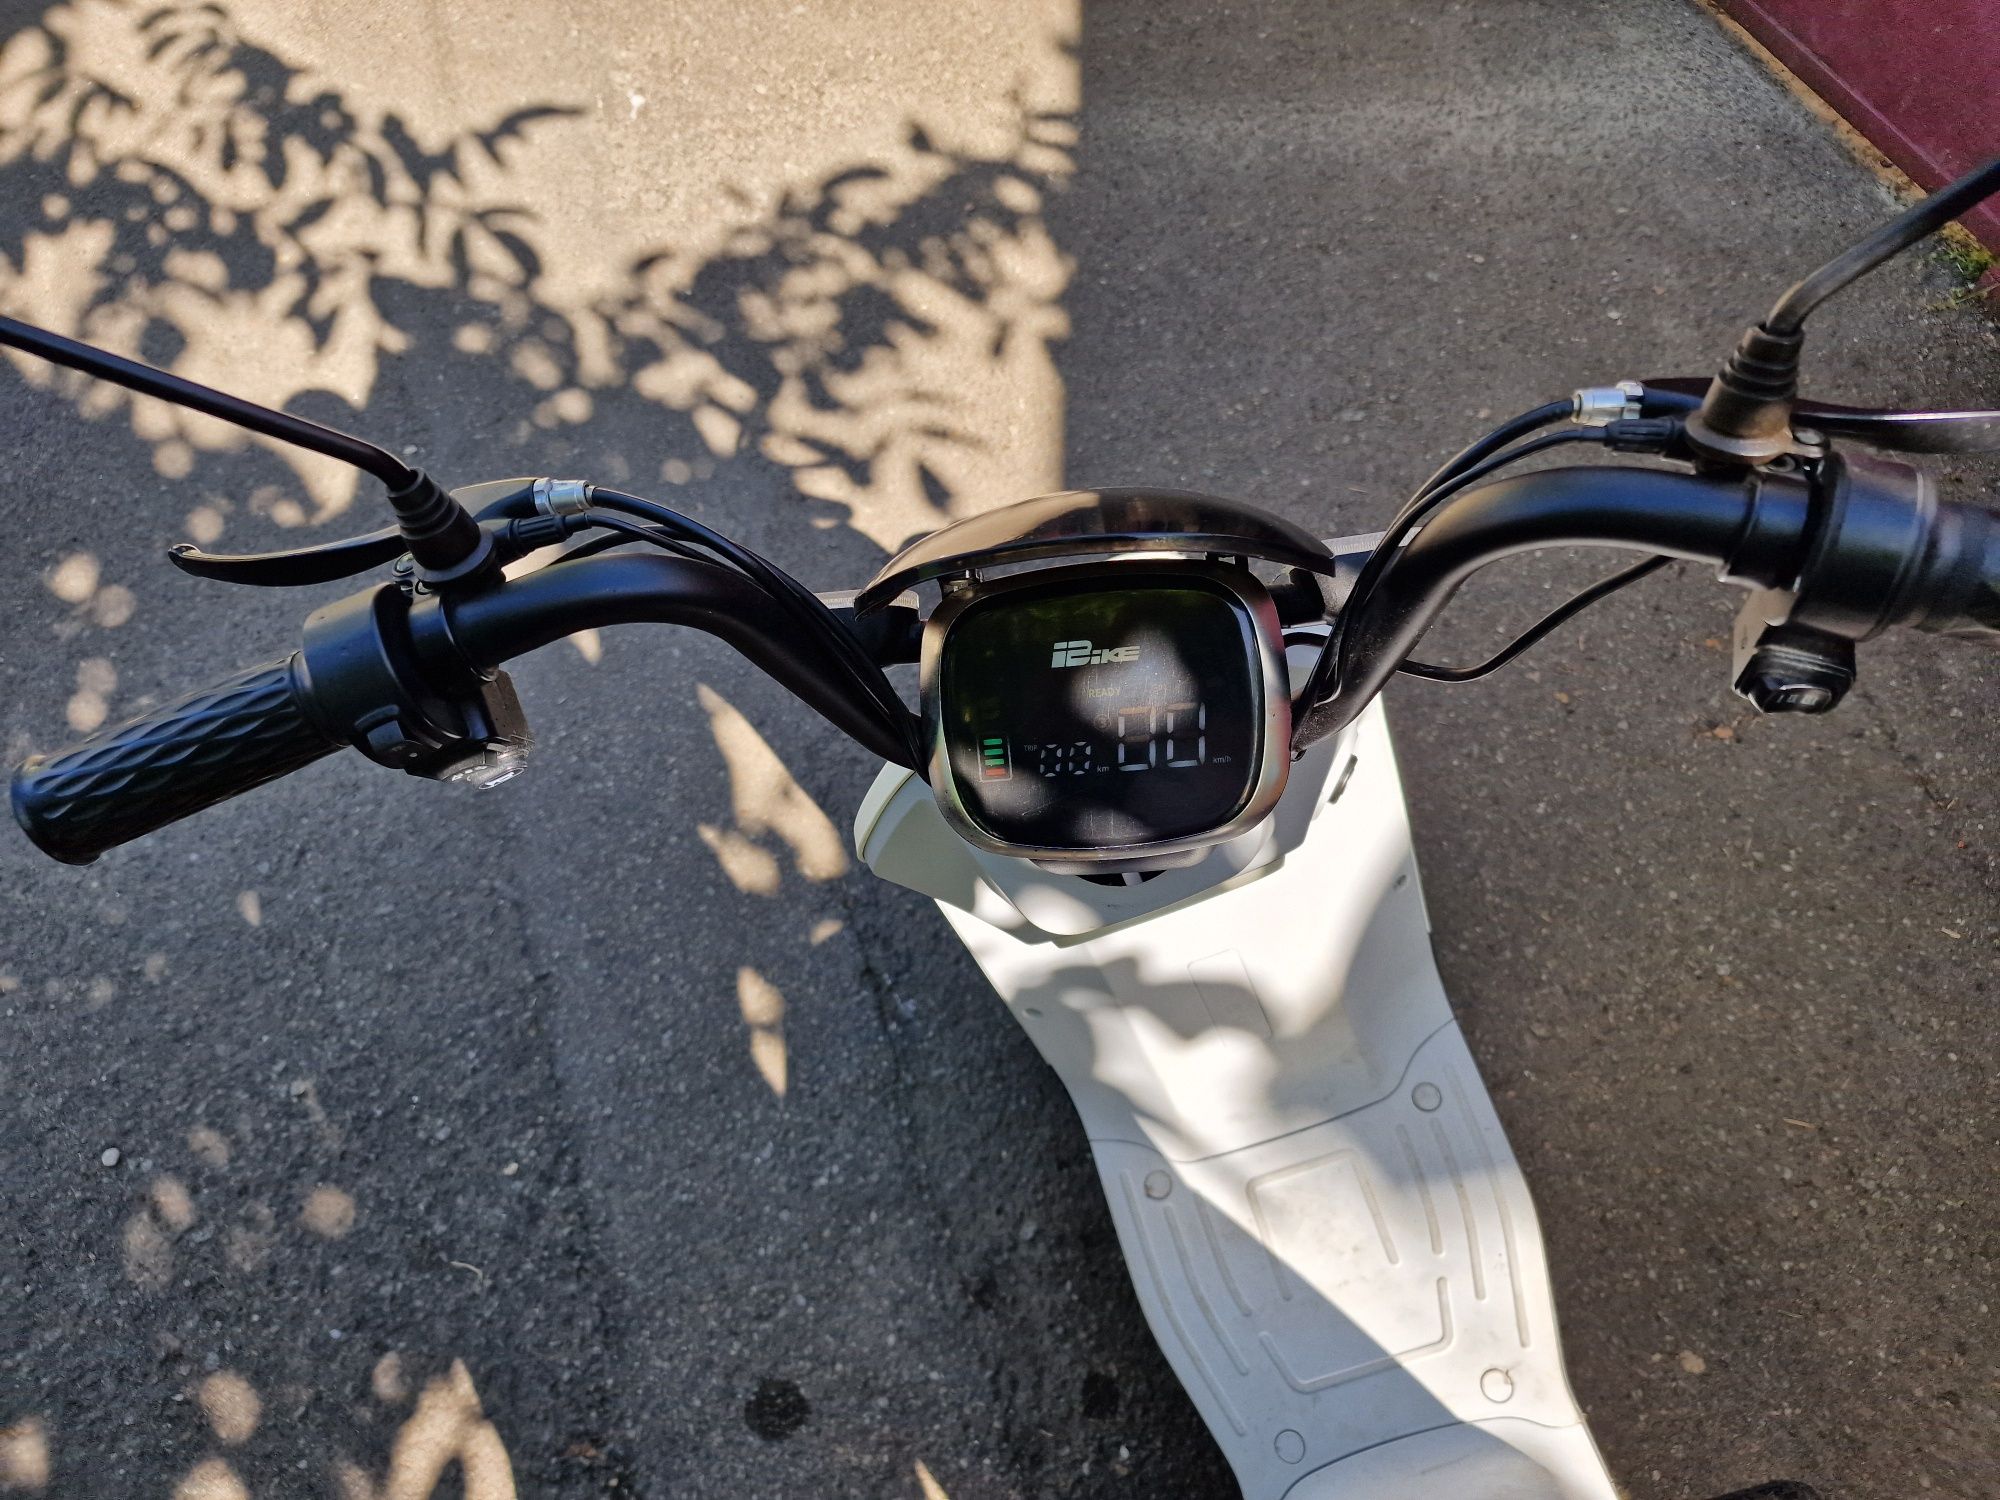 Bicicleta electrica tip scooter, nu necesita Permis